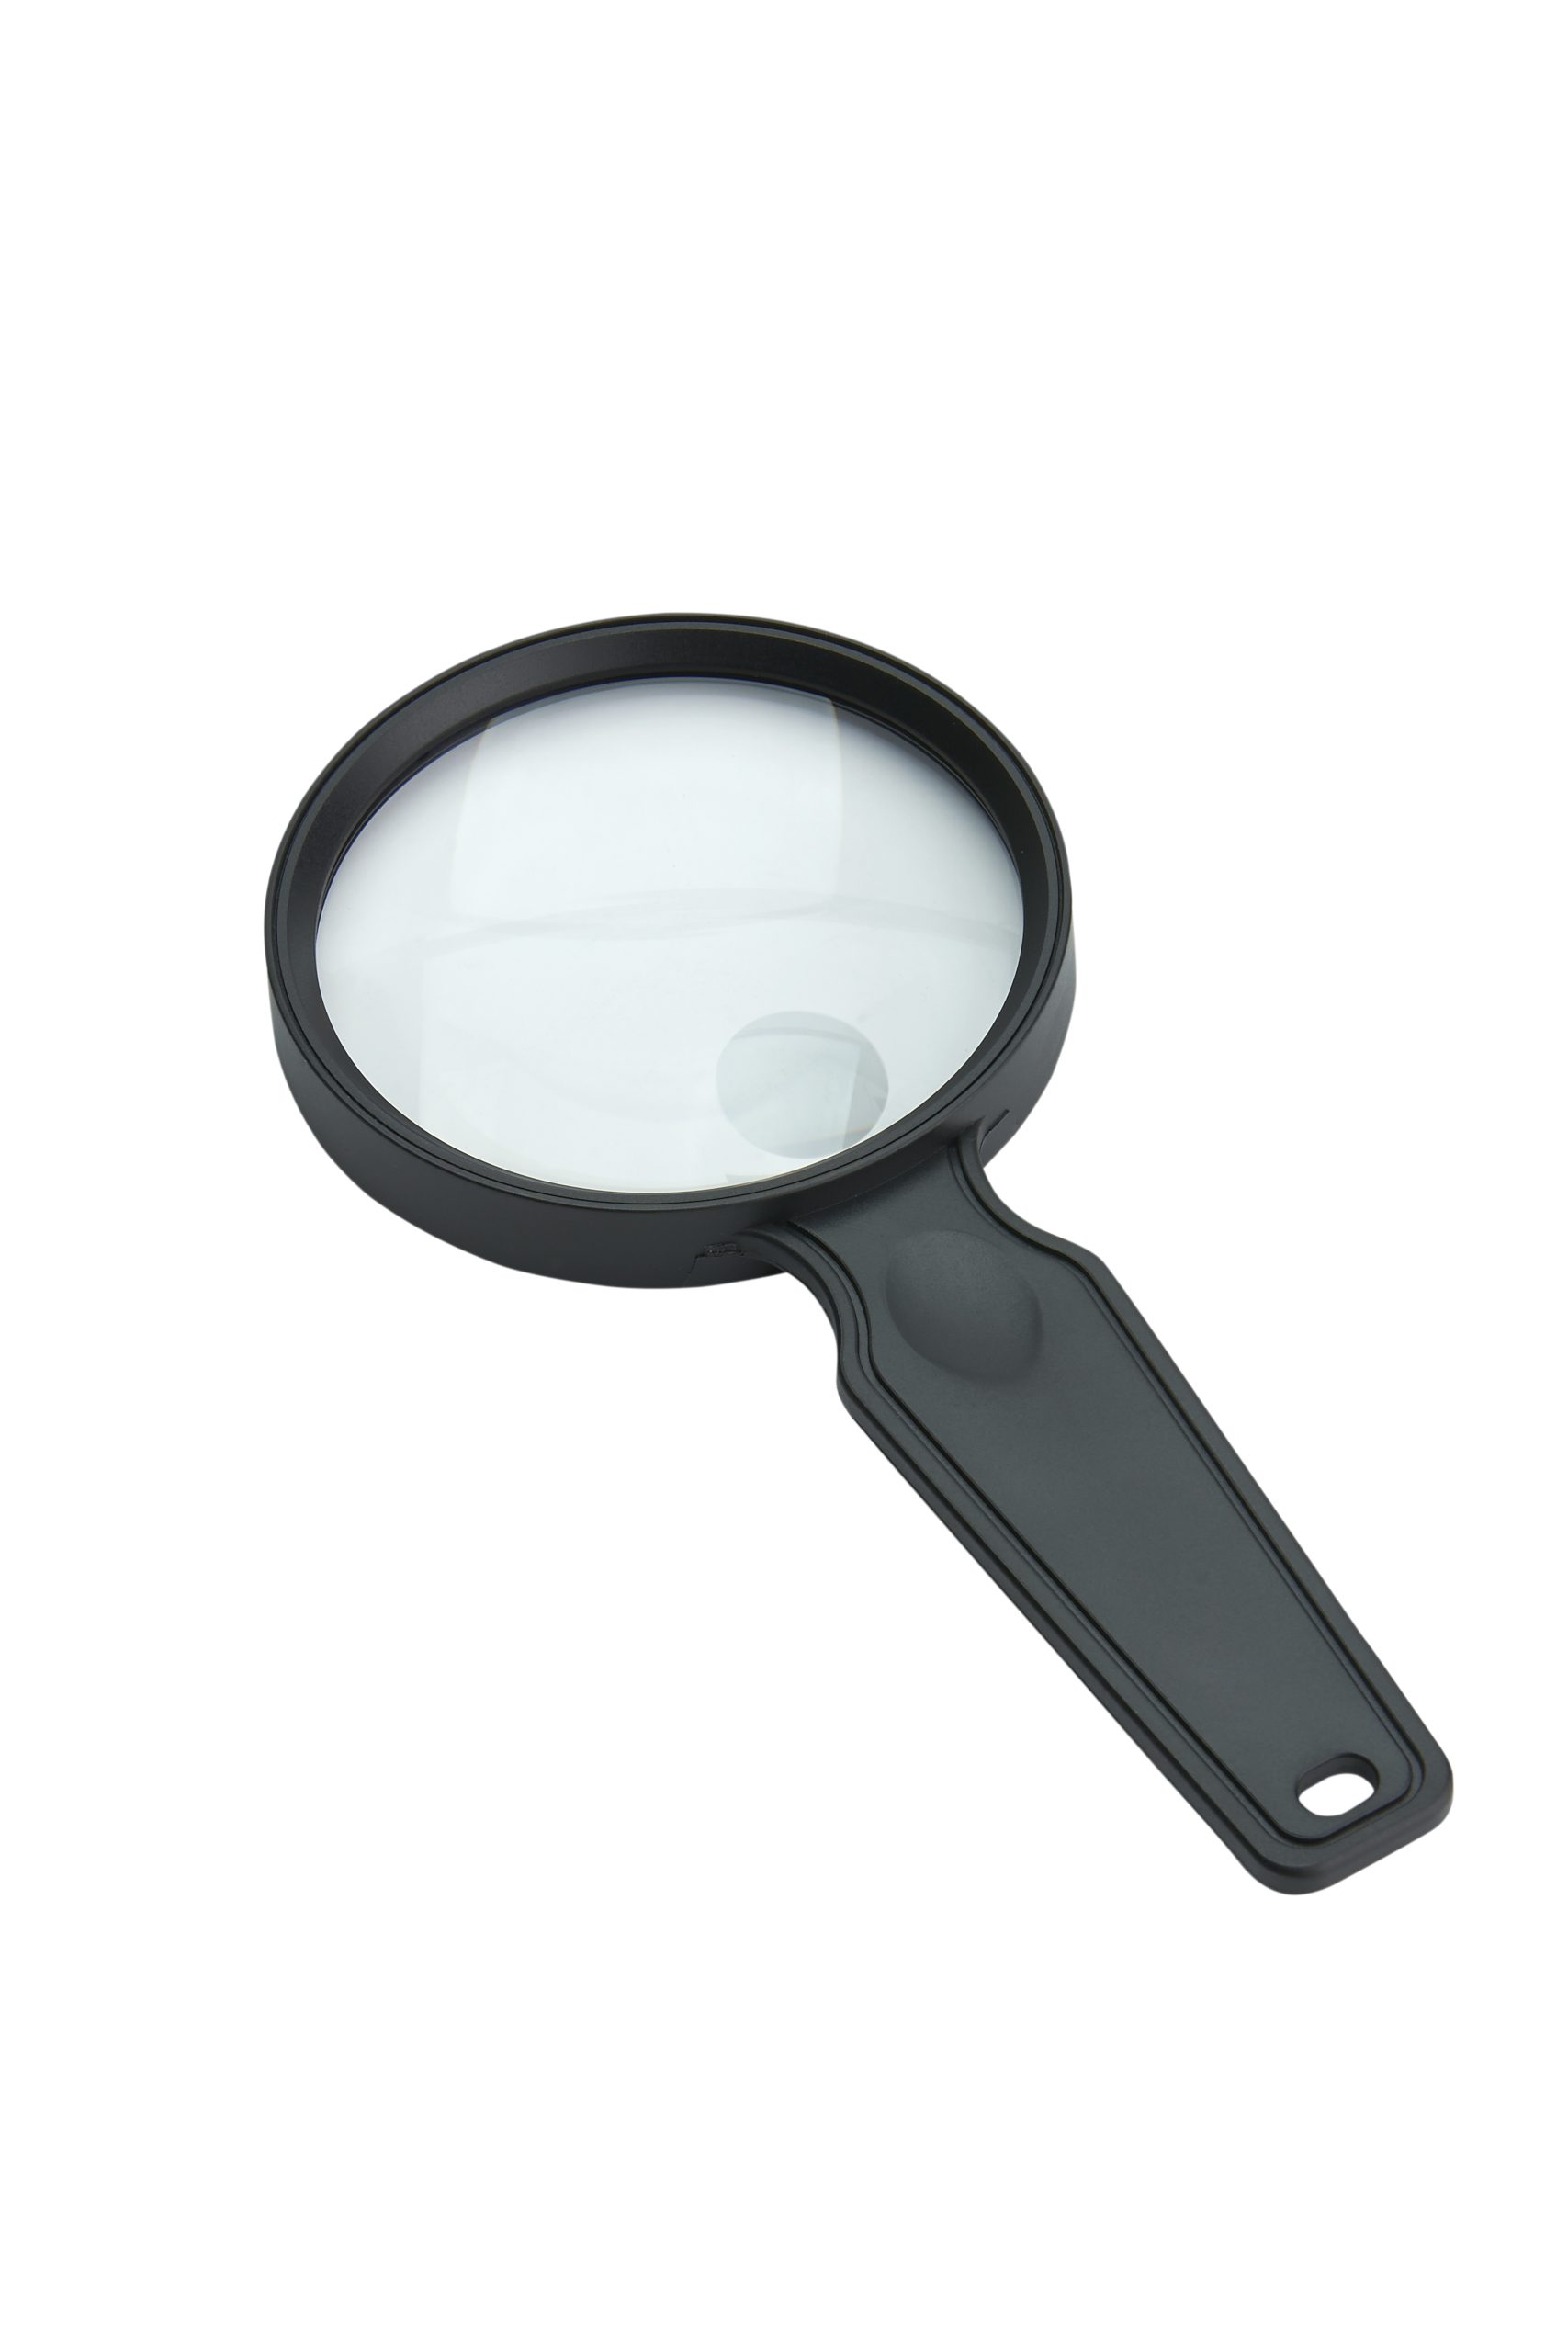 Glass Handheld Magnifier